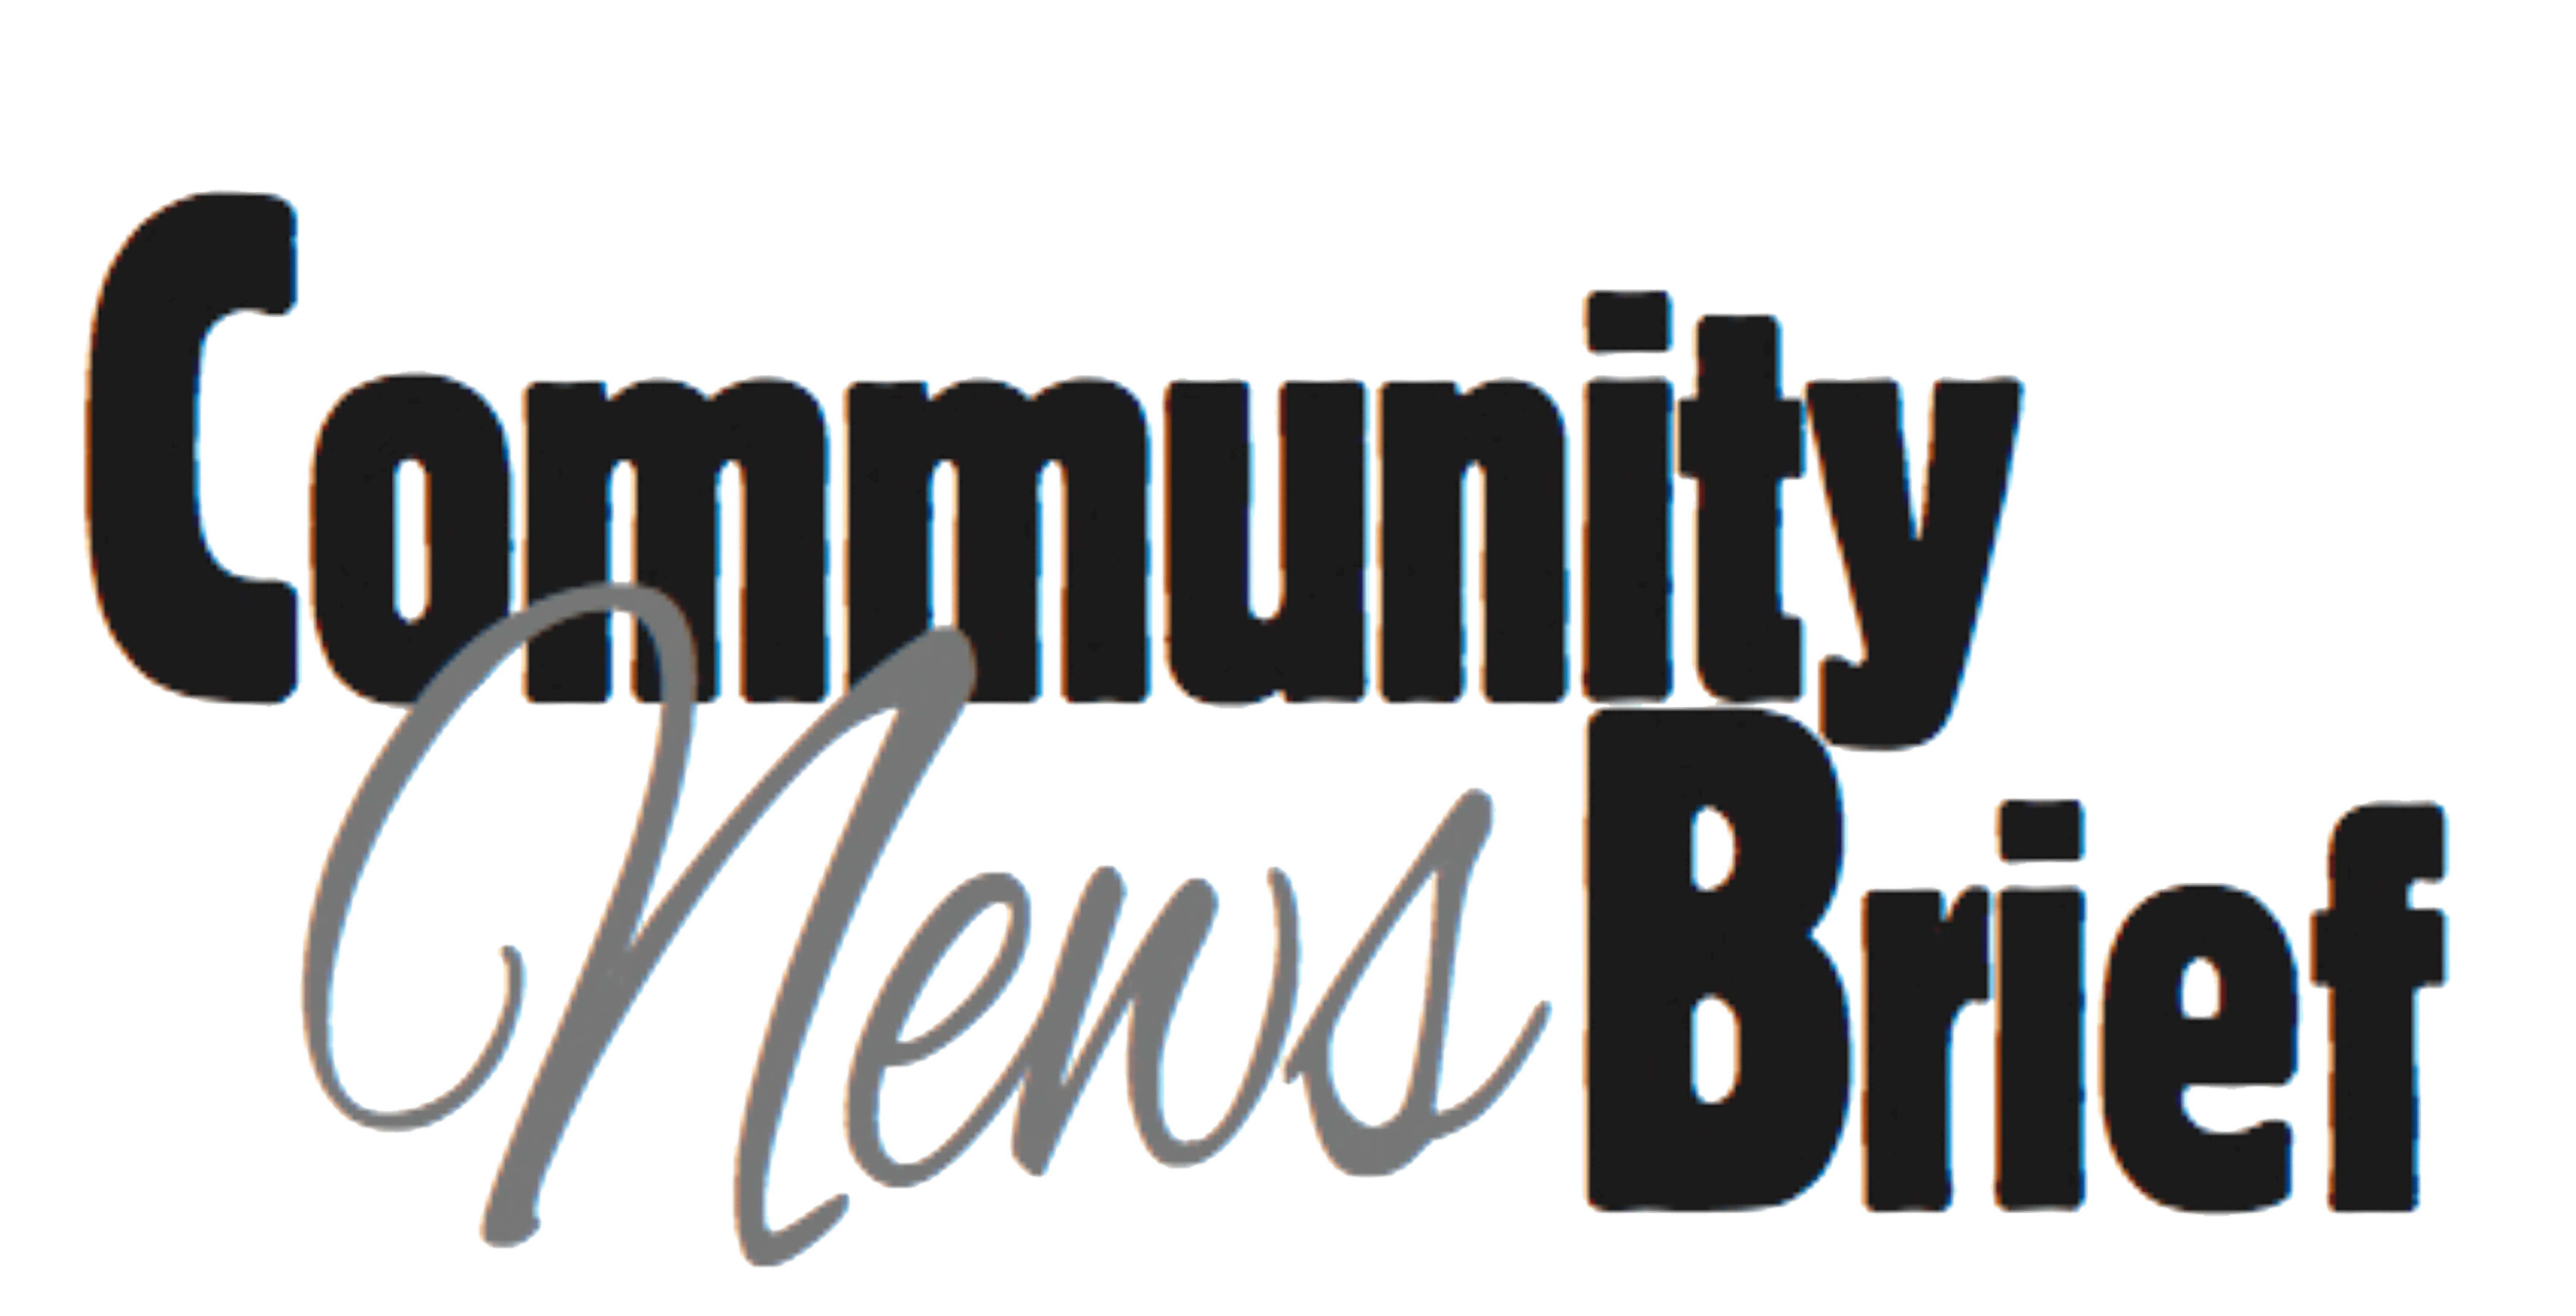 Community News Brief